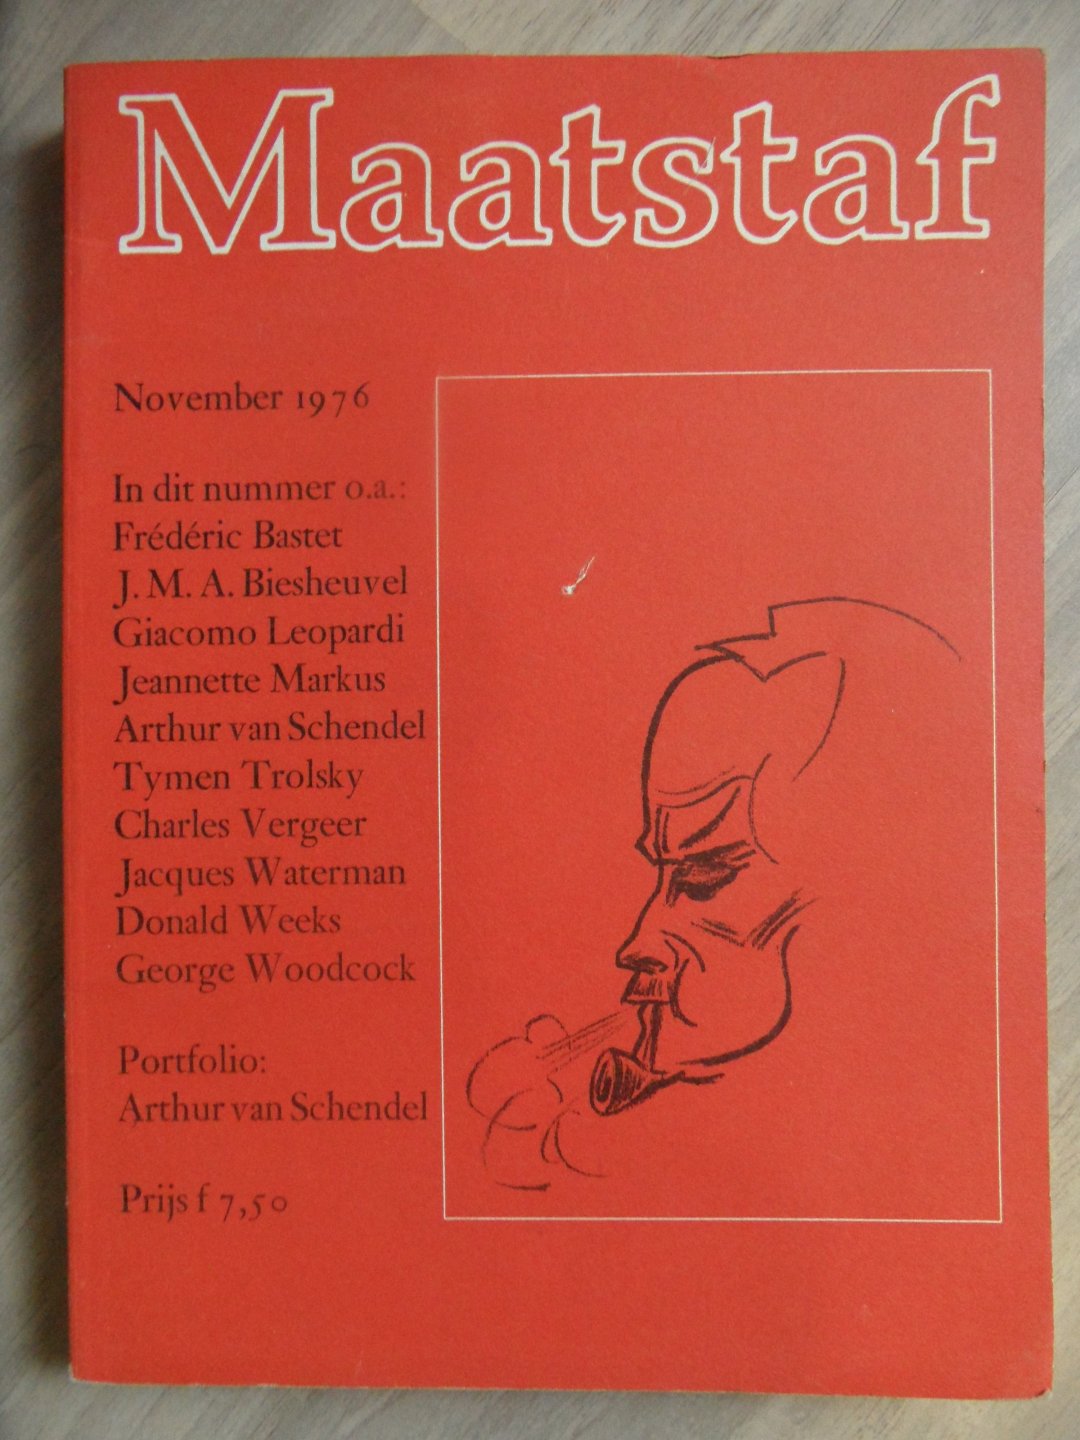  - Maatstaf november 1976 met oa frederic Bastet, J.M.A. Biesheuvel, Giacomo Leopardi, Jeannette Markus